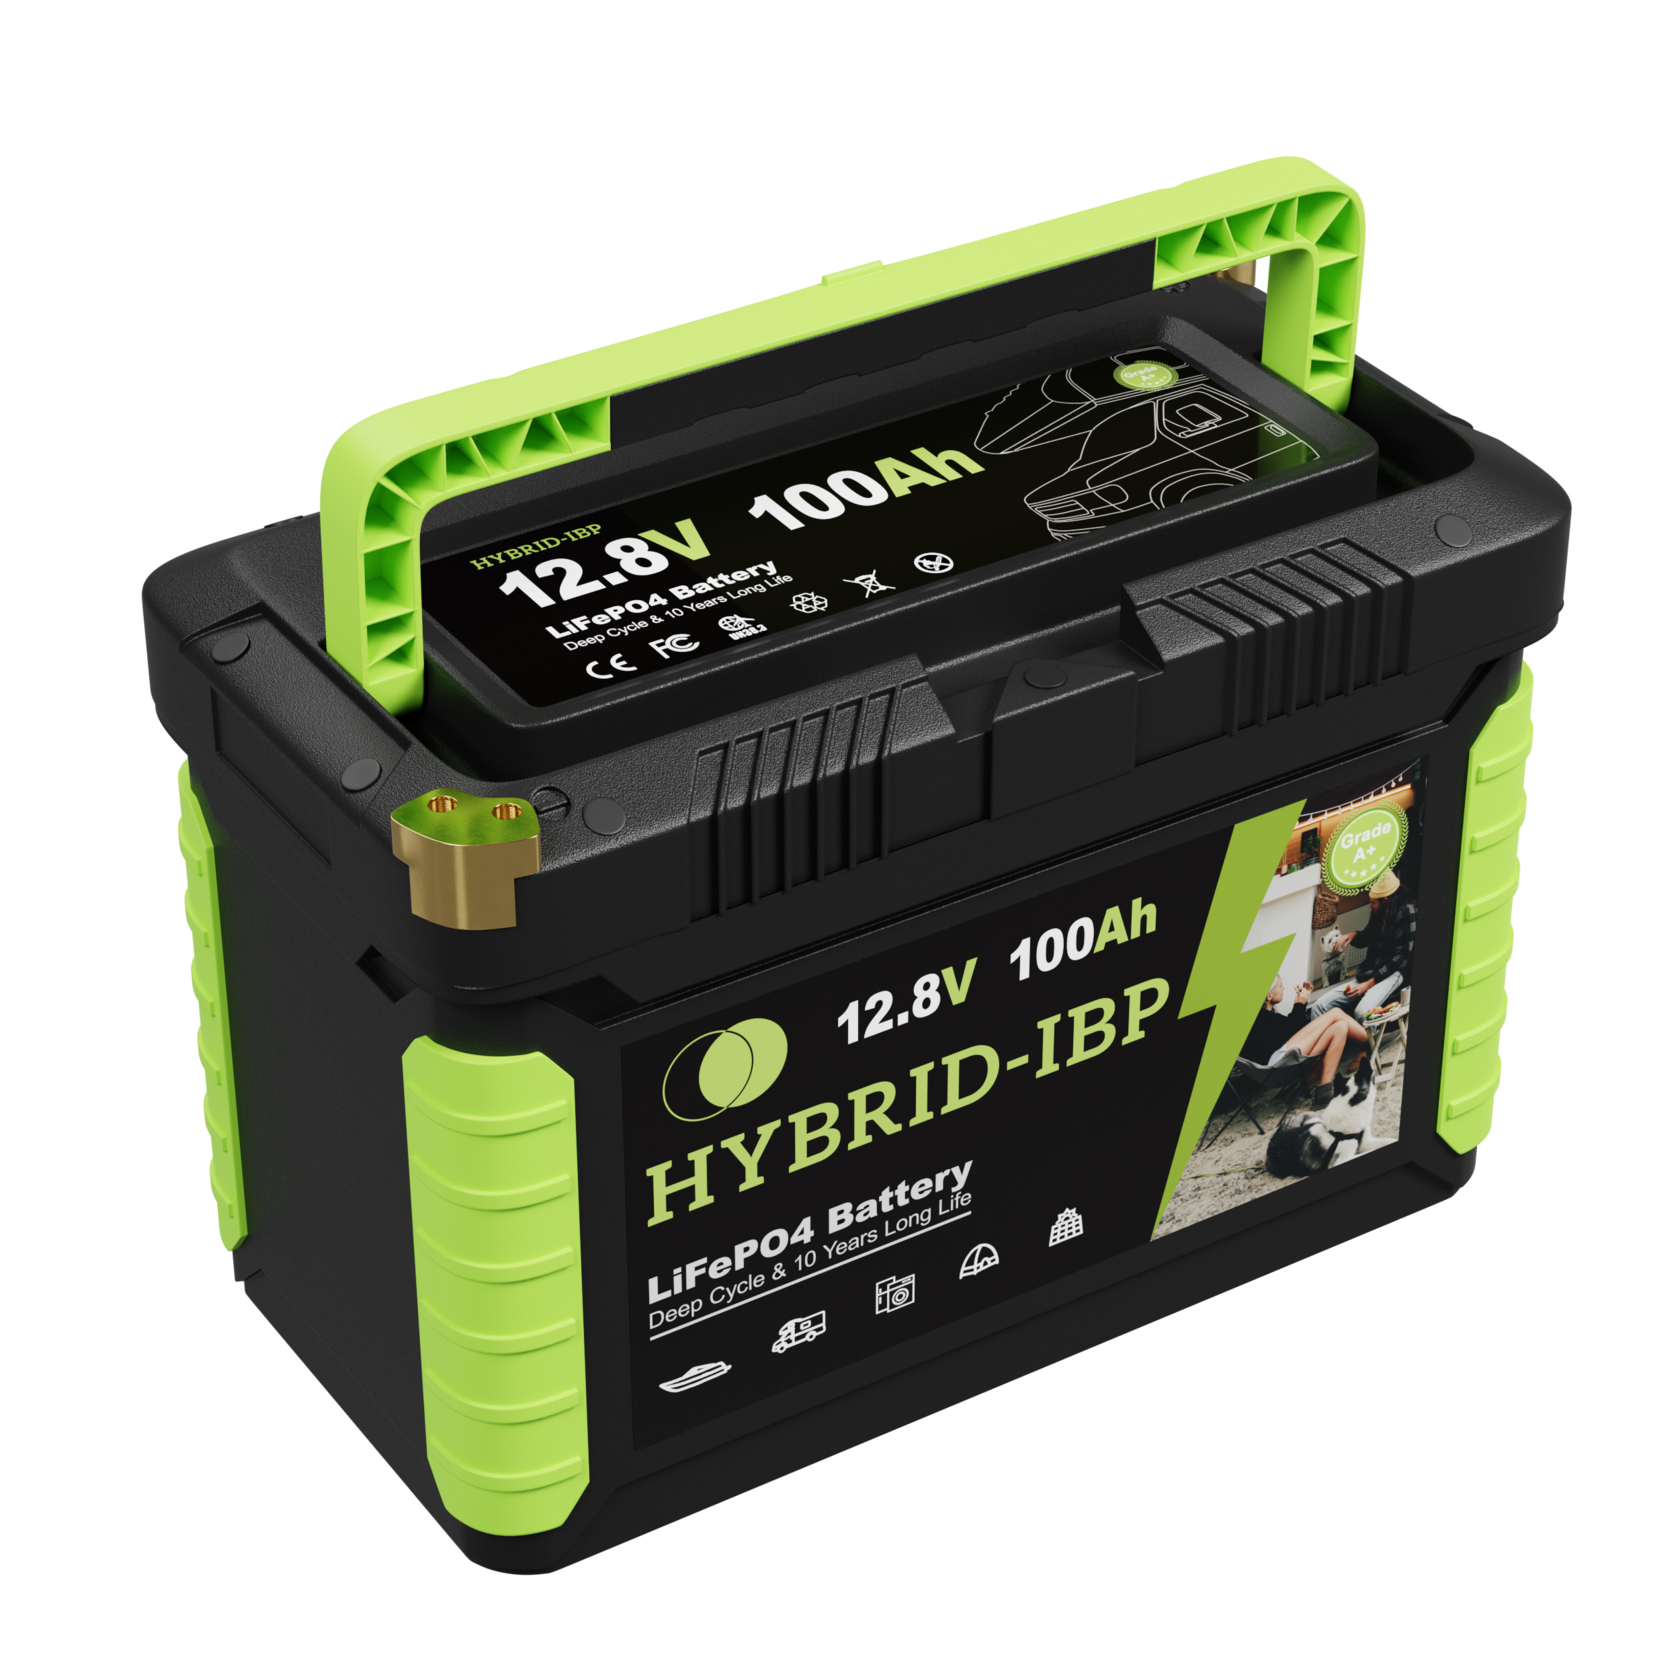 Hybrid battery. Гибридный аккумулятор. Батарея гибрида. Батарейка HFC 1340 9 6v.